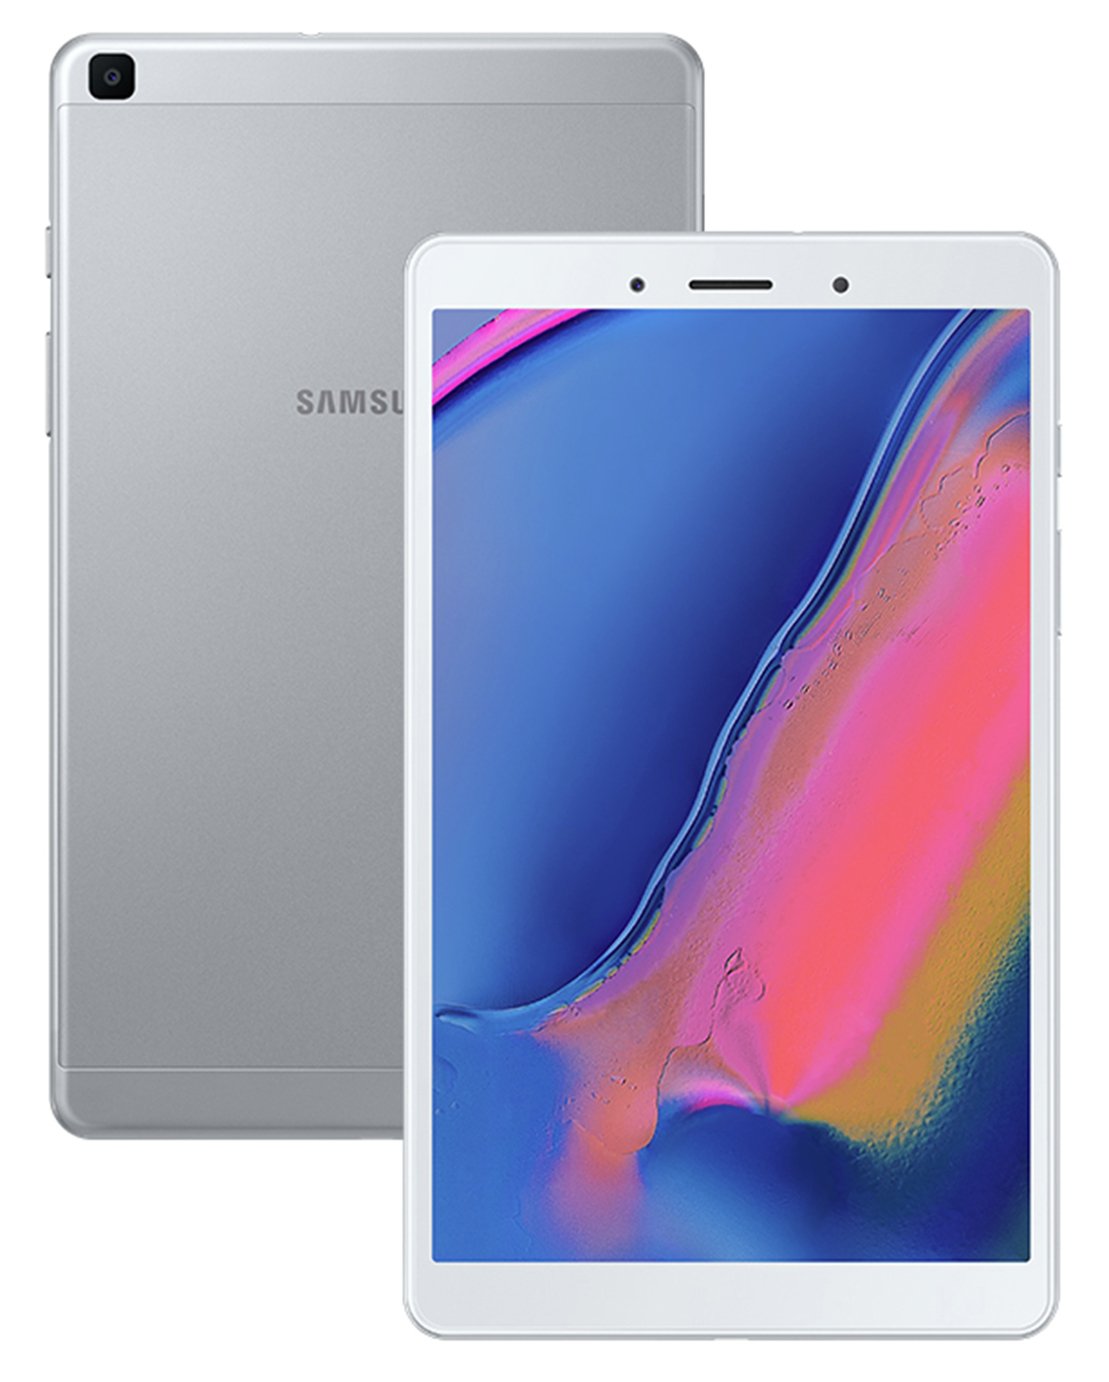 Samsung Galaxy Tab A8 2019 8 Inch 32GB Tablet Review